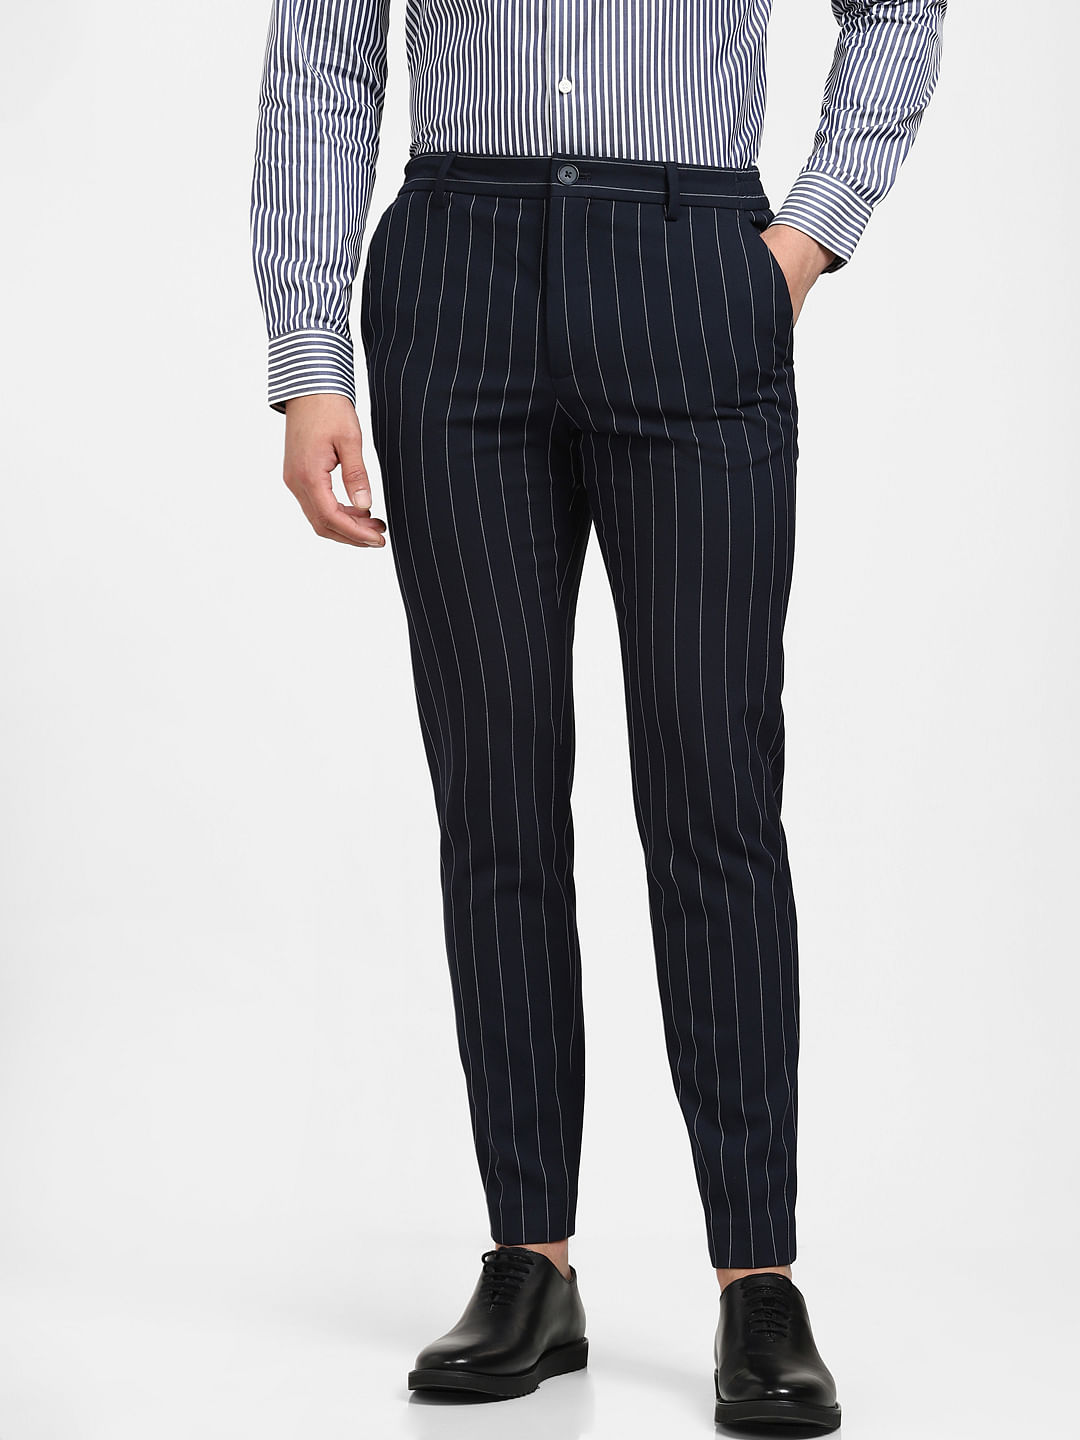 When Should A Man Buy A Pinstripe Suit